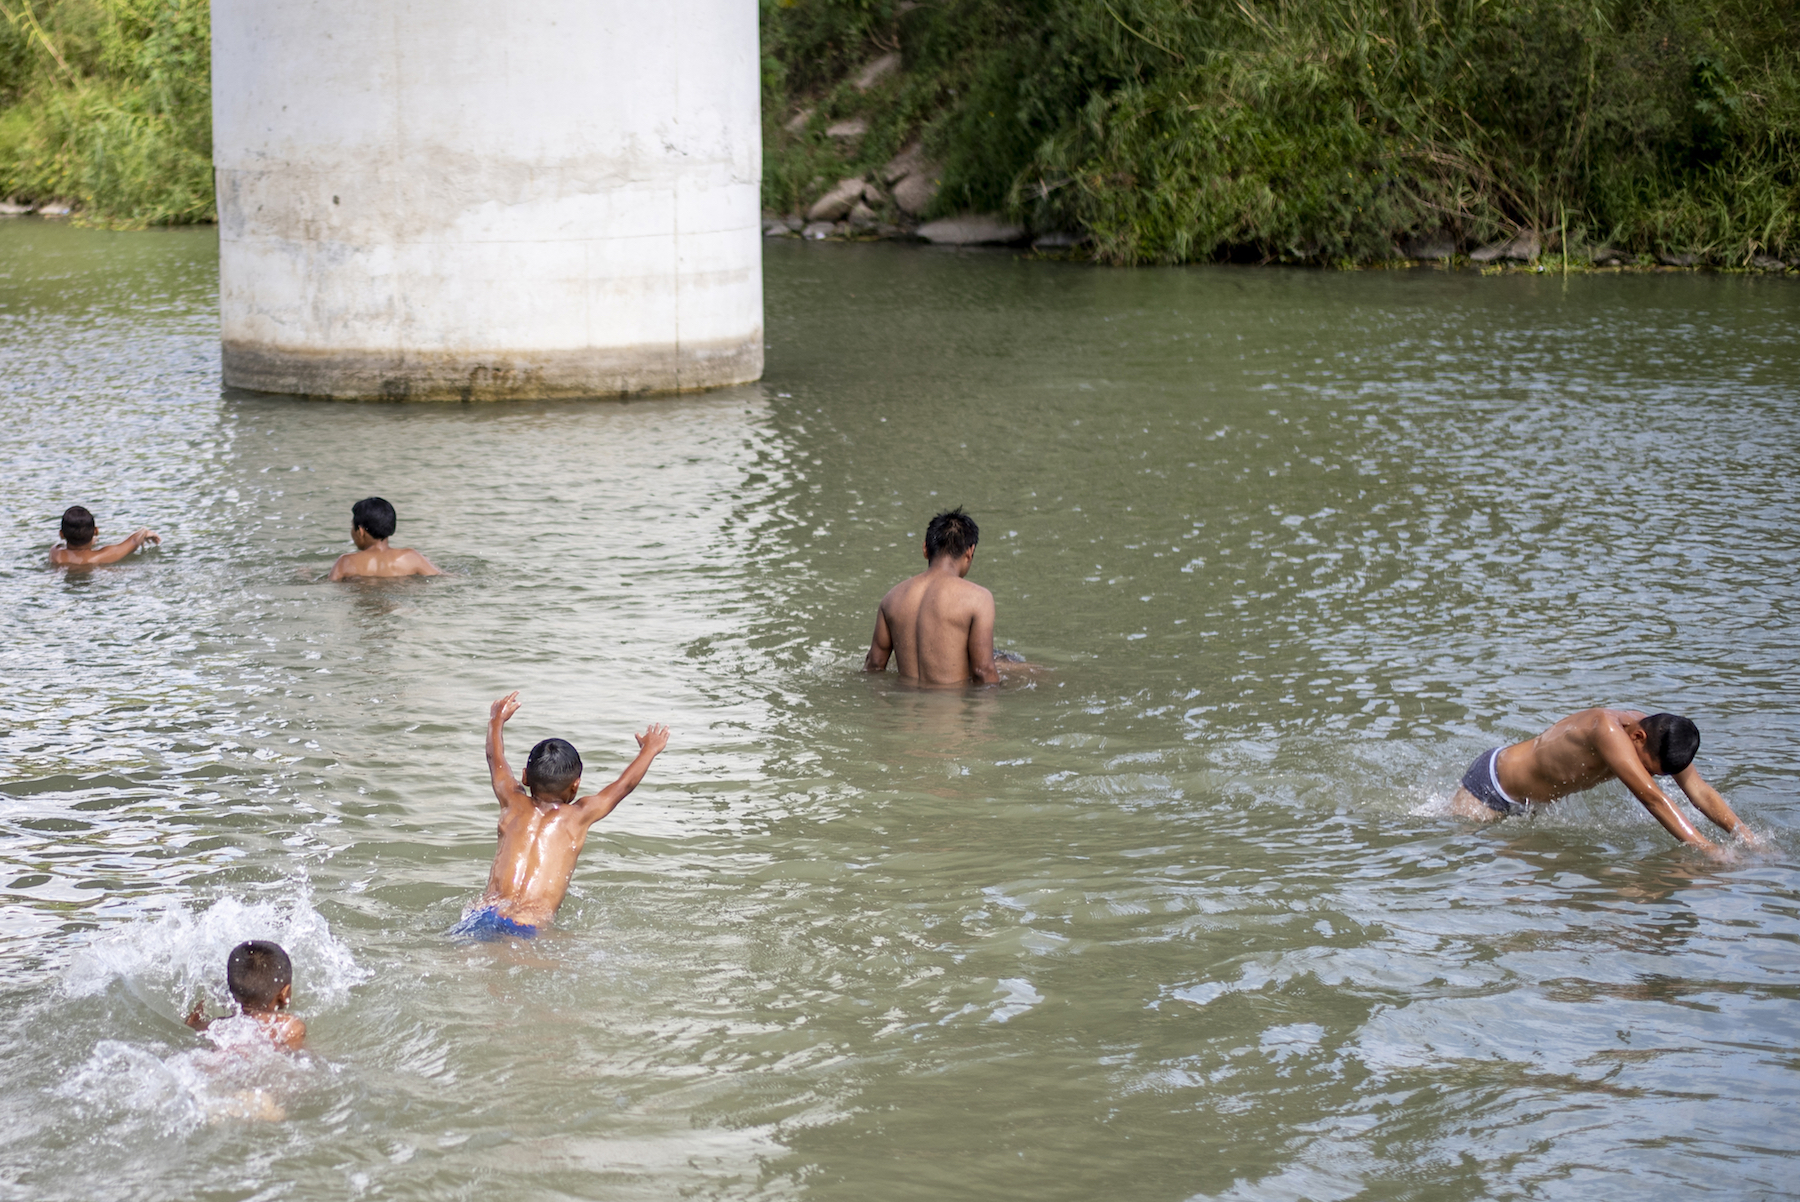 Boys play in the Rio Grande. Photo by Sergio Flores.